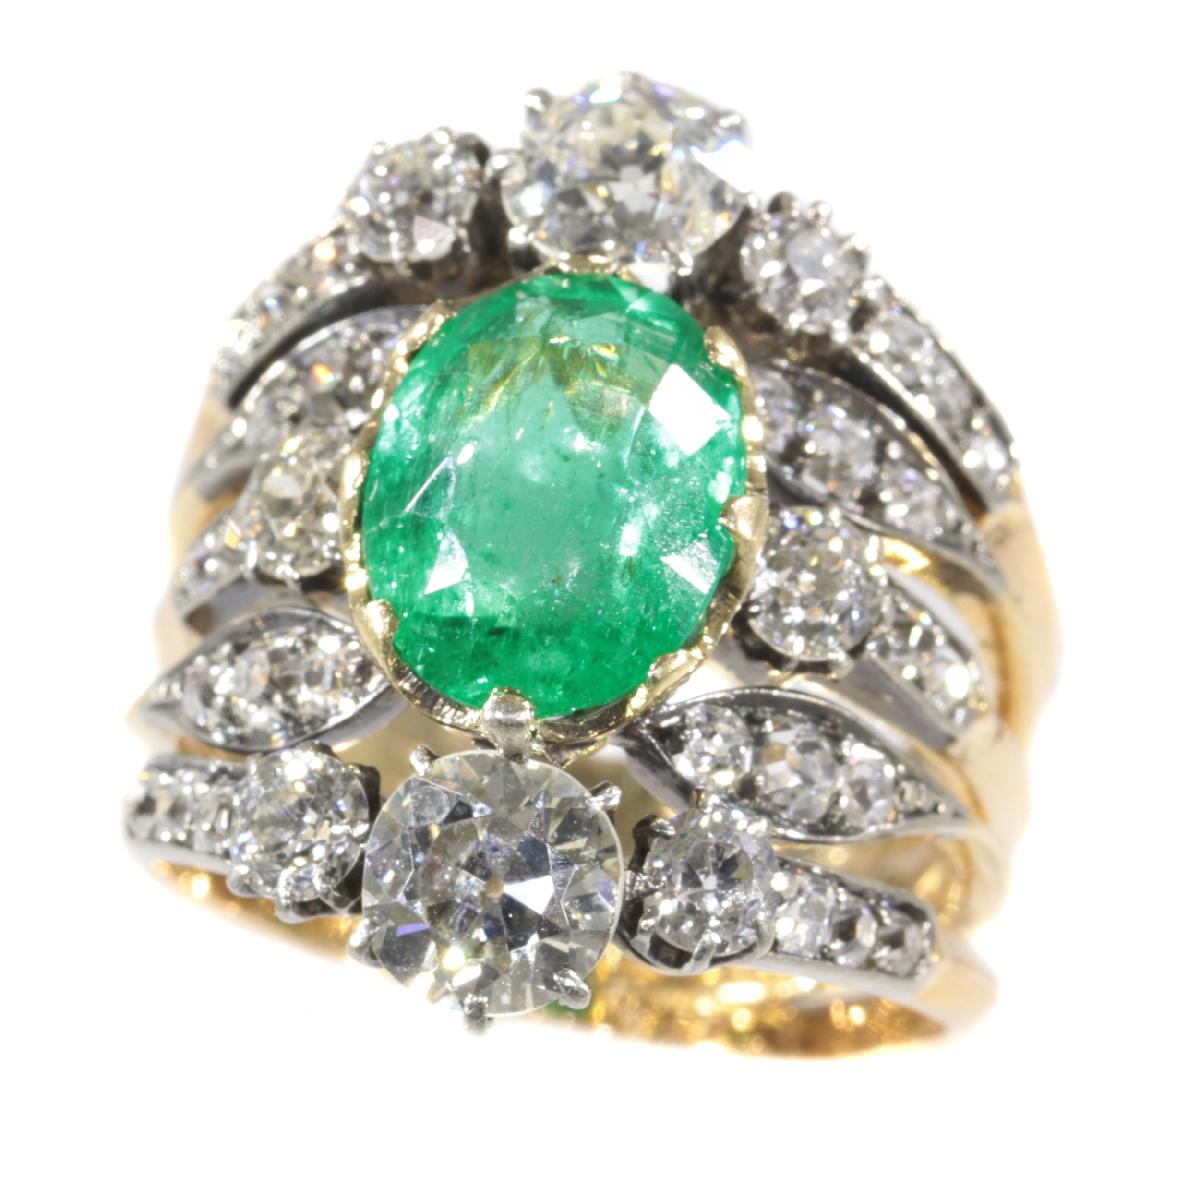 True Eyecatcher Victorian Antique Ring with a 3.50 Carat Ovalcut Emerald